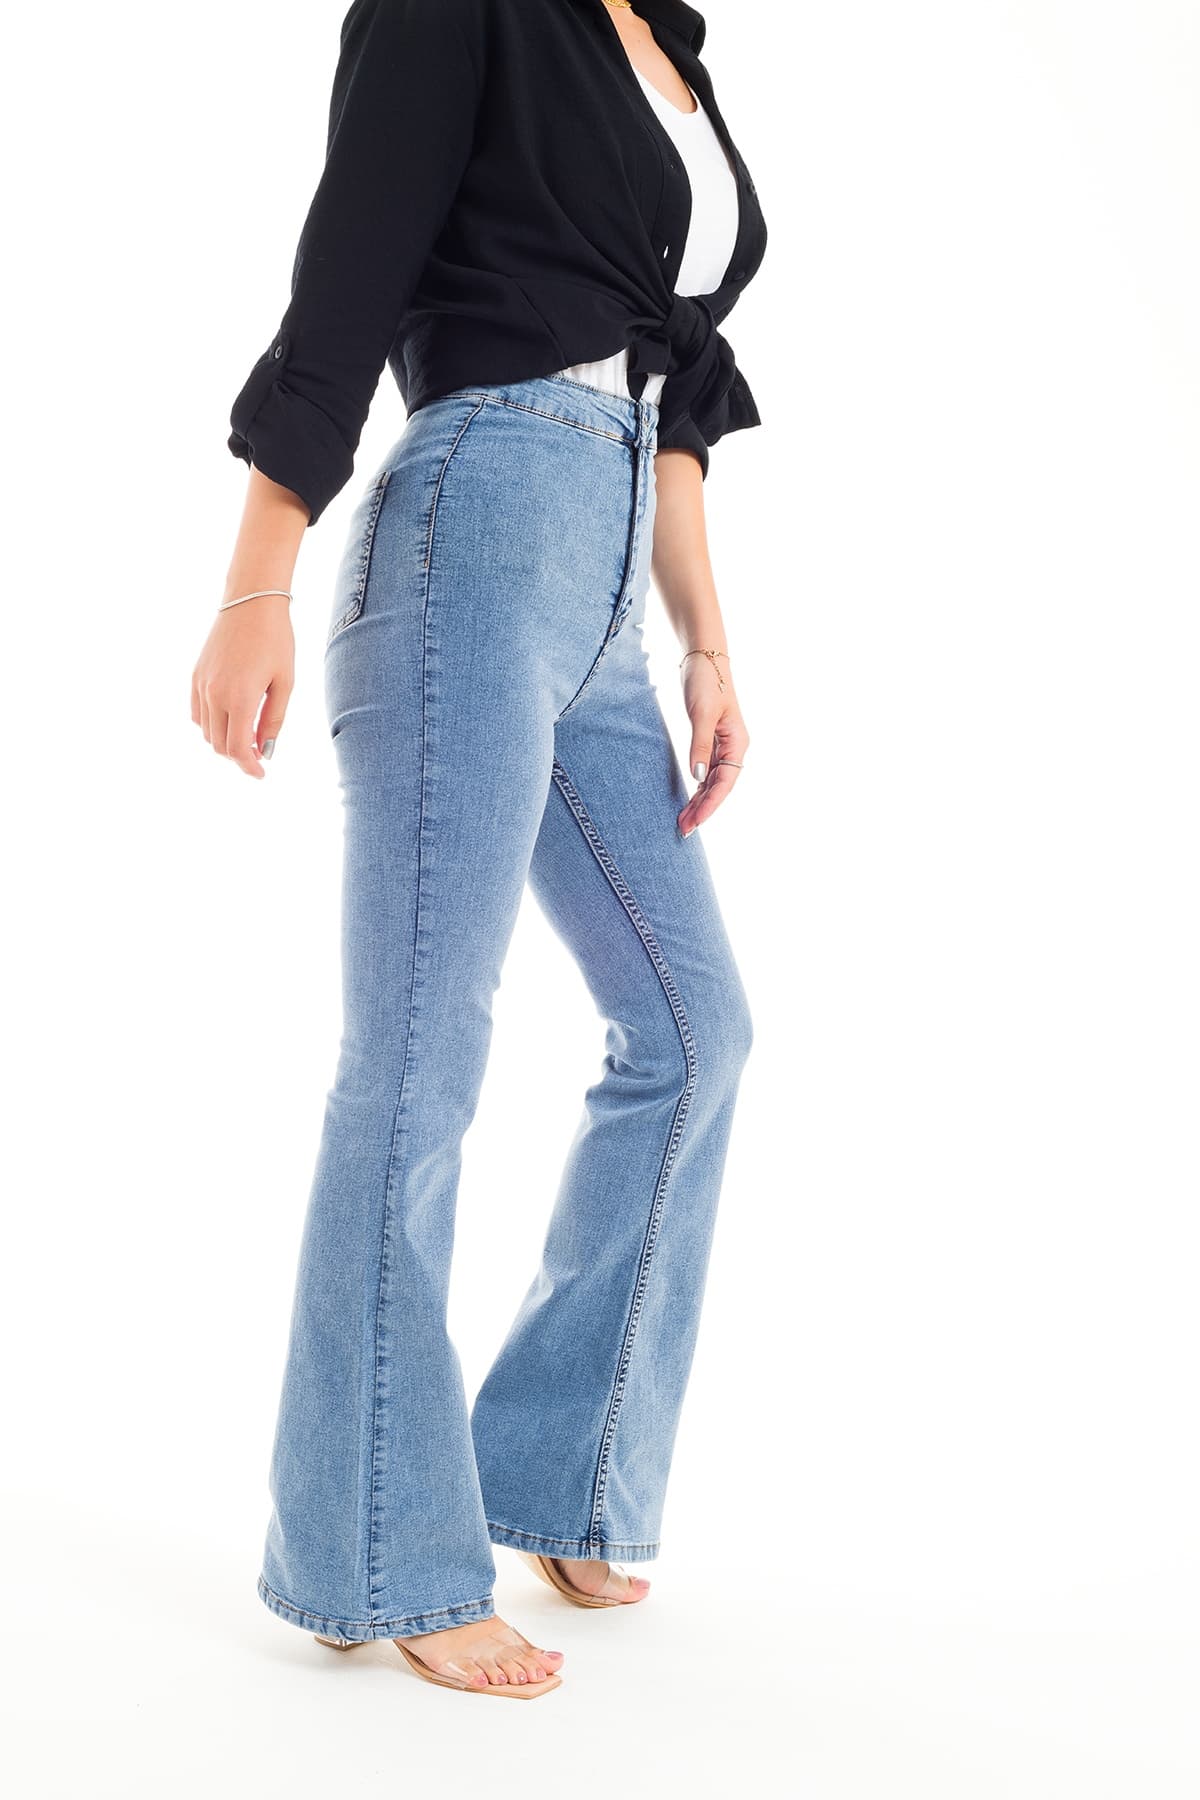 ZDN 9267 İspanyol Paça Düz Model Kadın Kot Pantolon